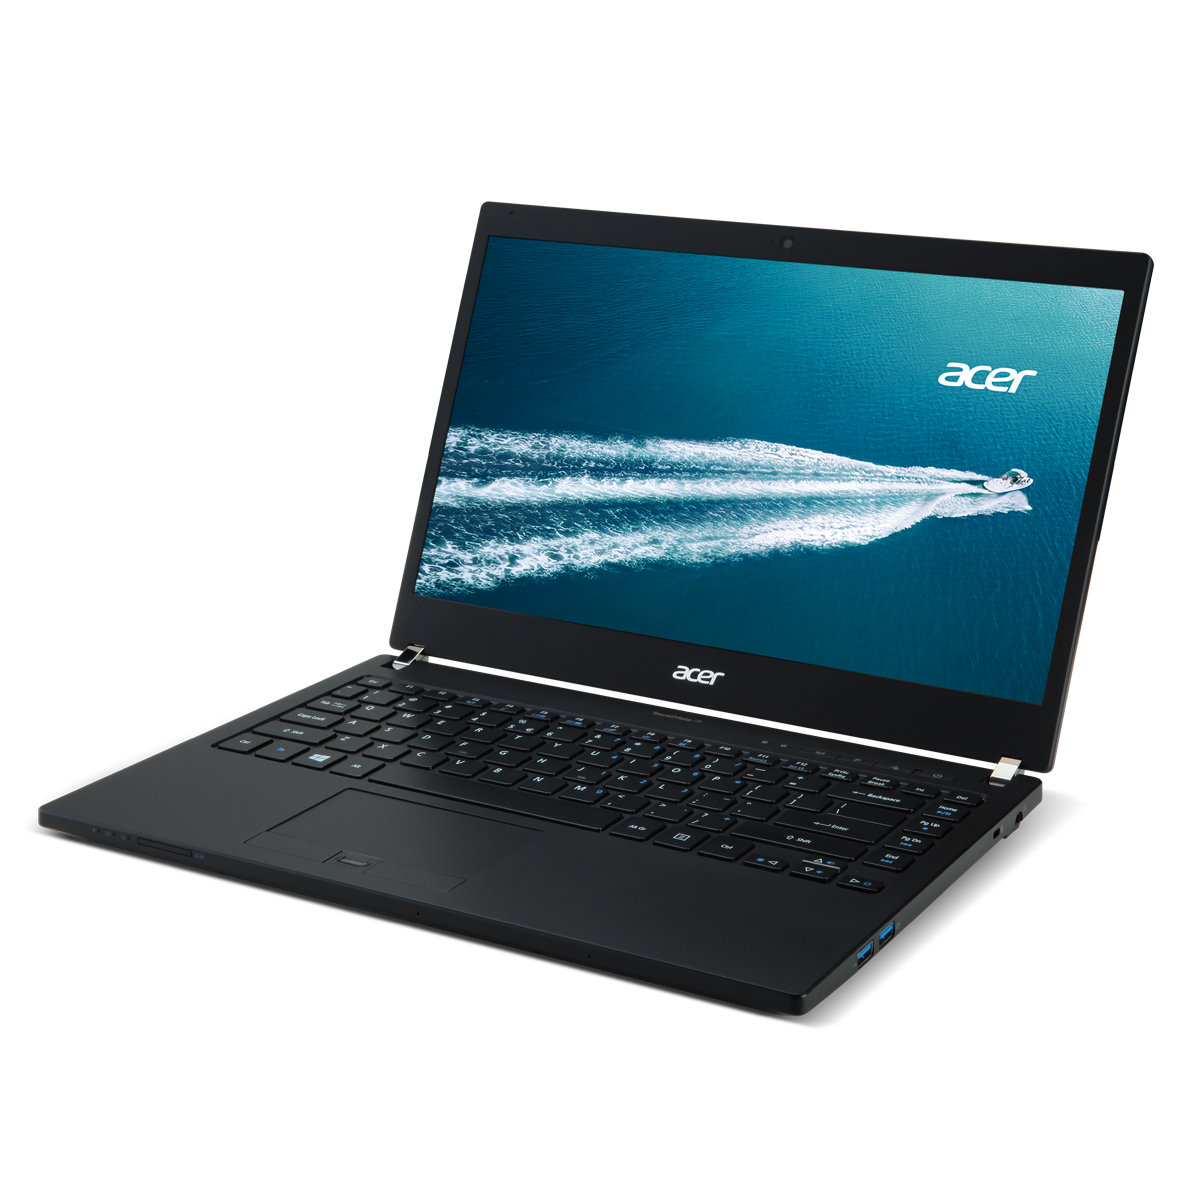 Acer TravelMate Laptop Repairs North Pole